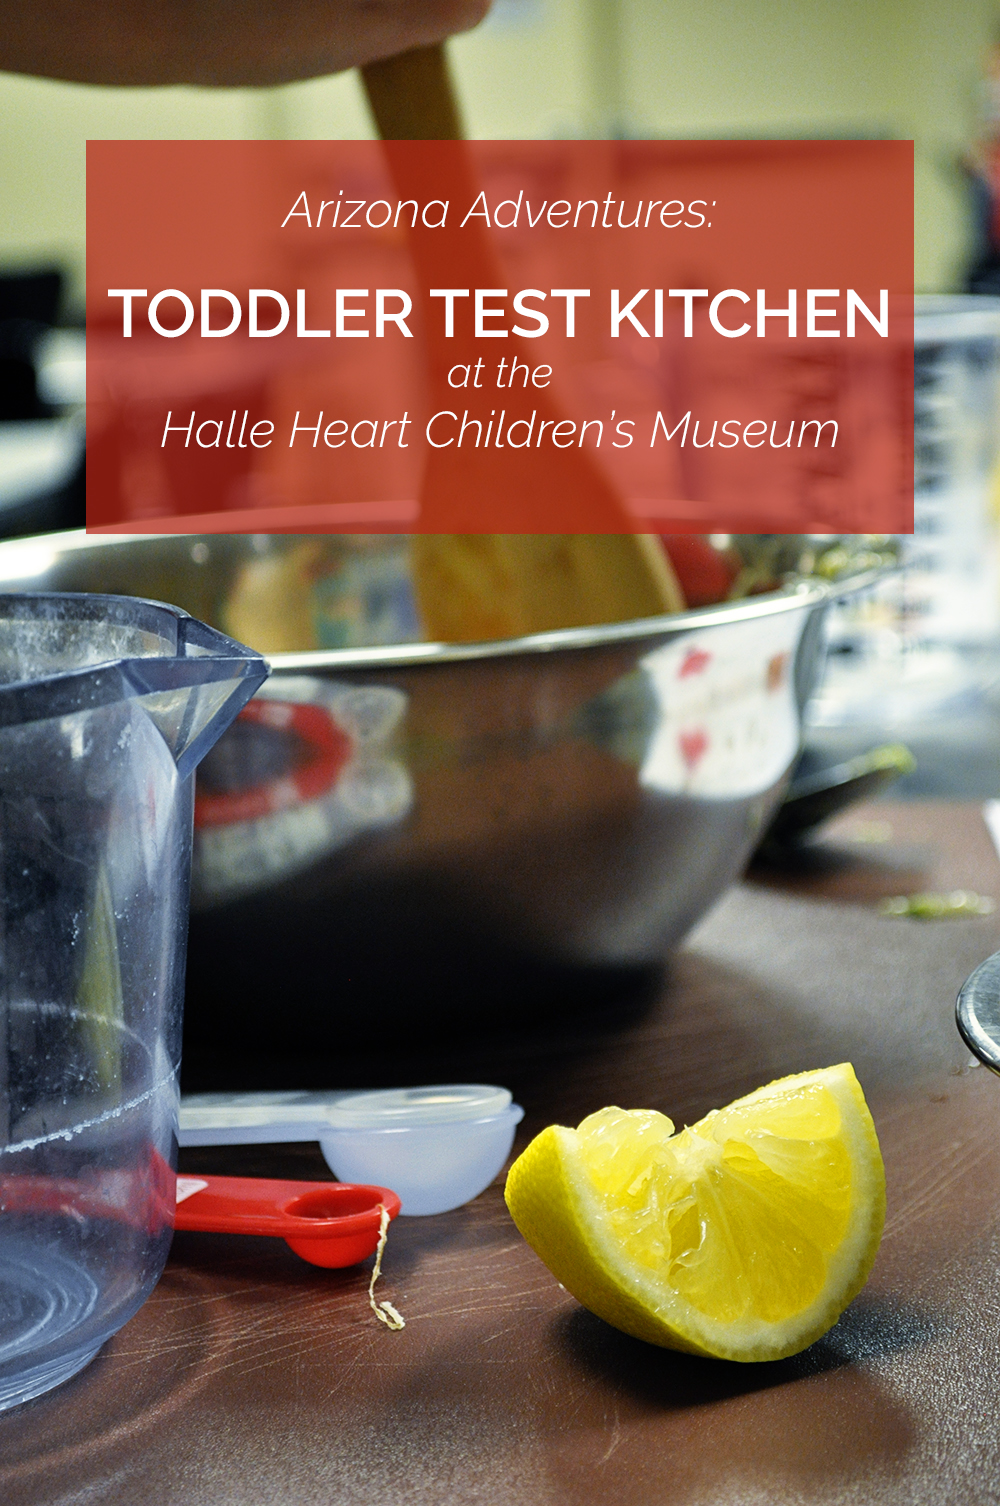 Arizona Adventures: The Toddler Test Kitchen